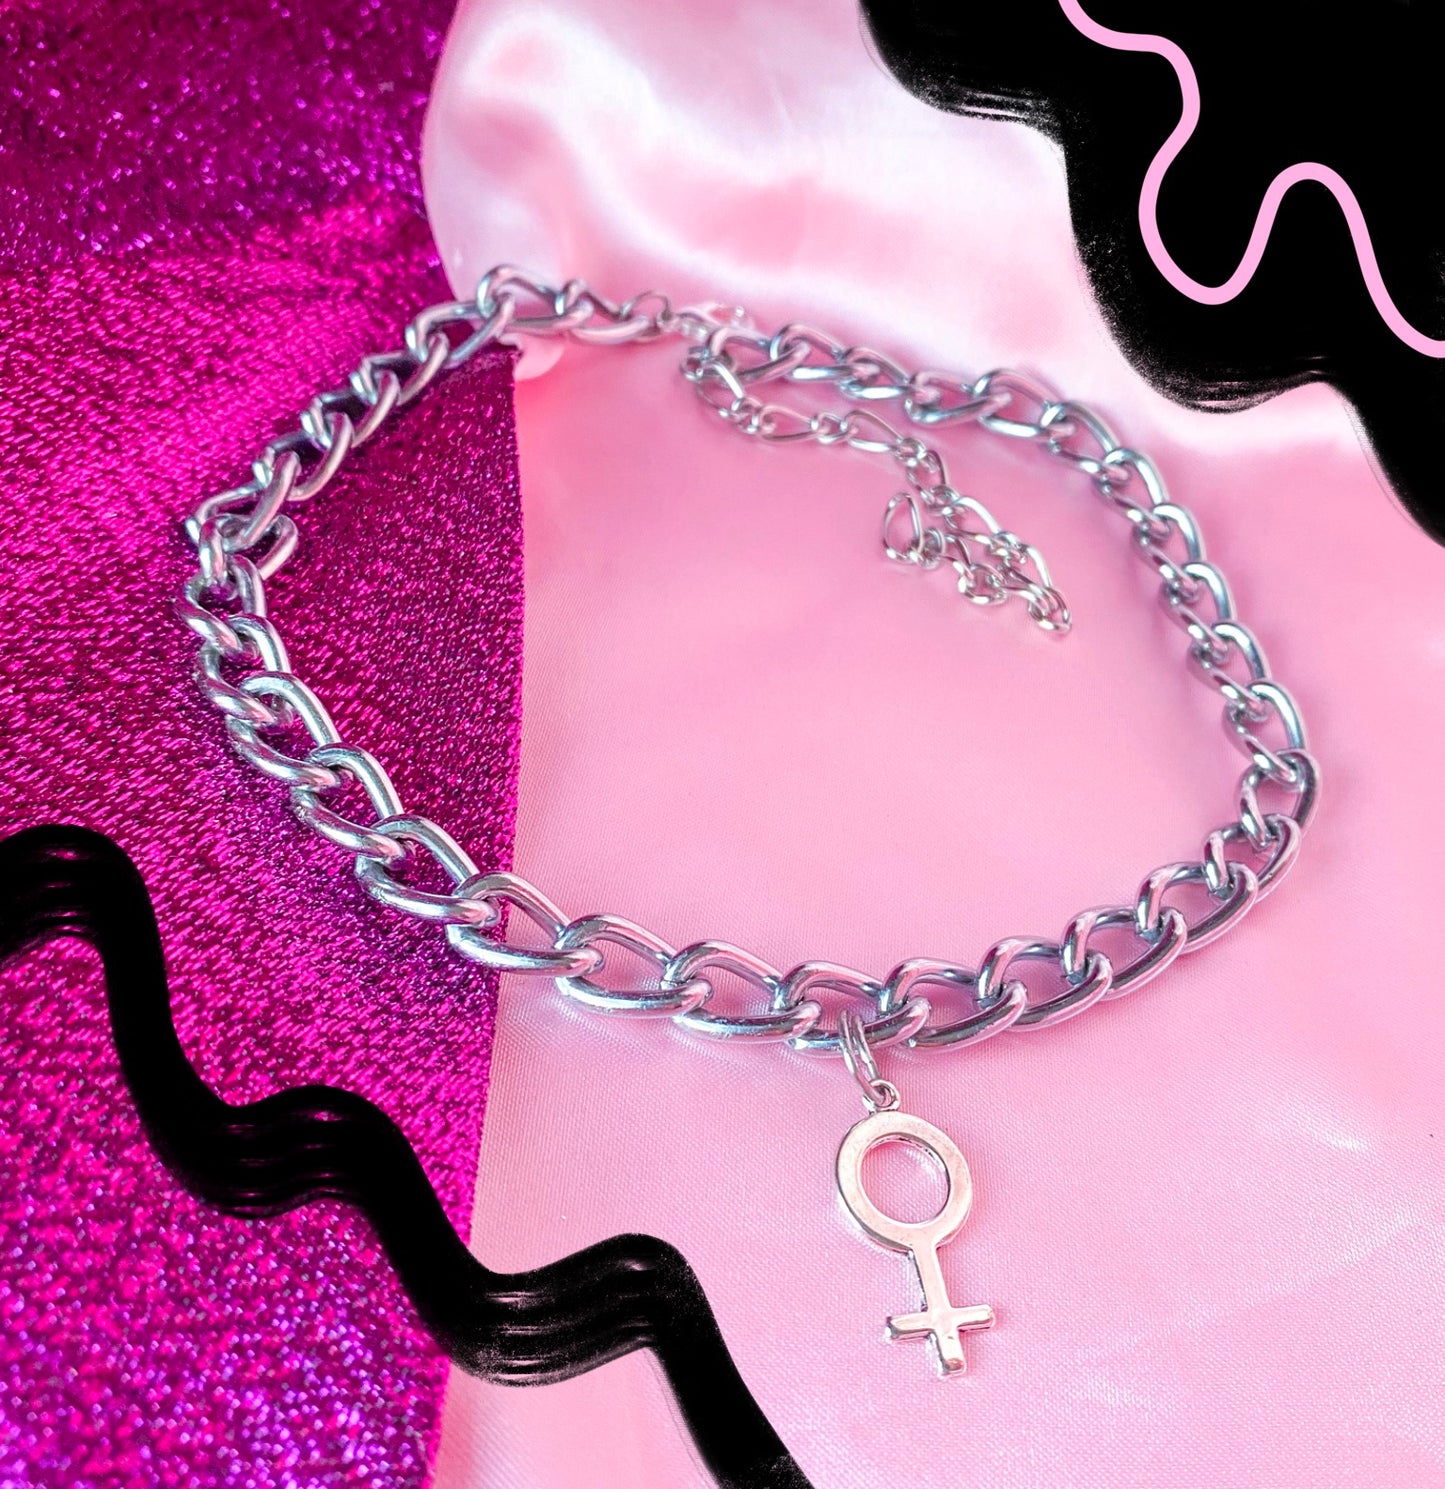 Venus symbol charm on chunky chain choker necklace